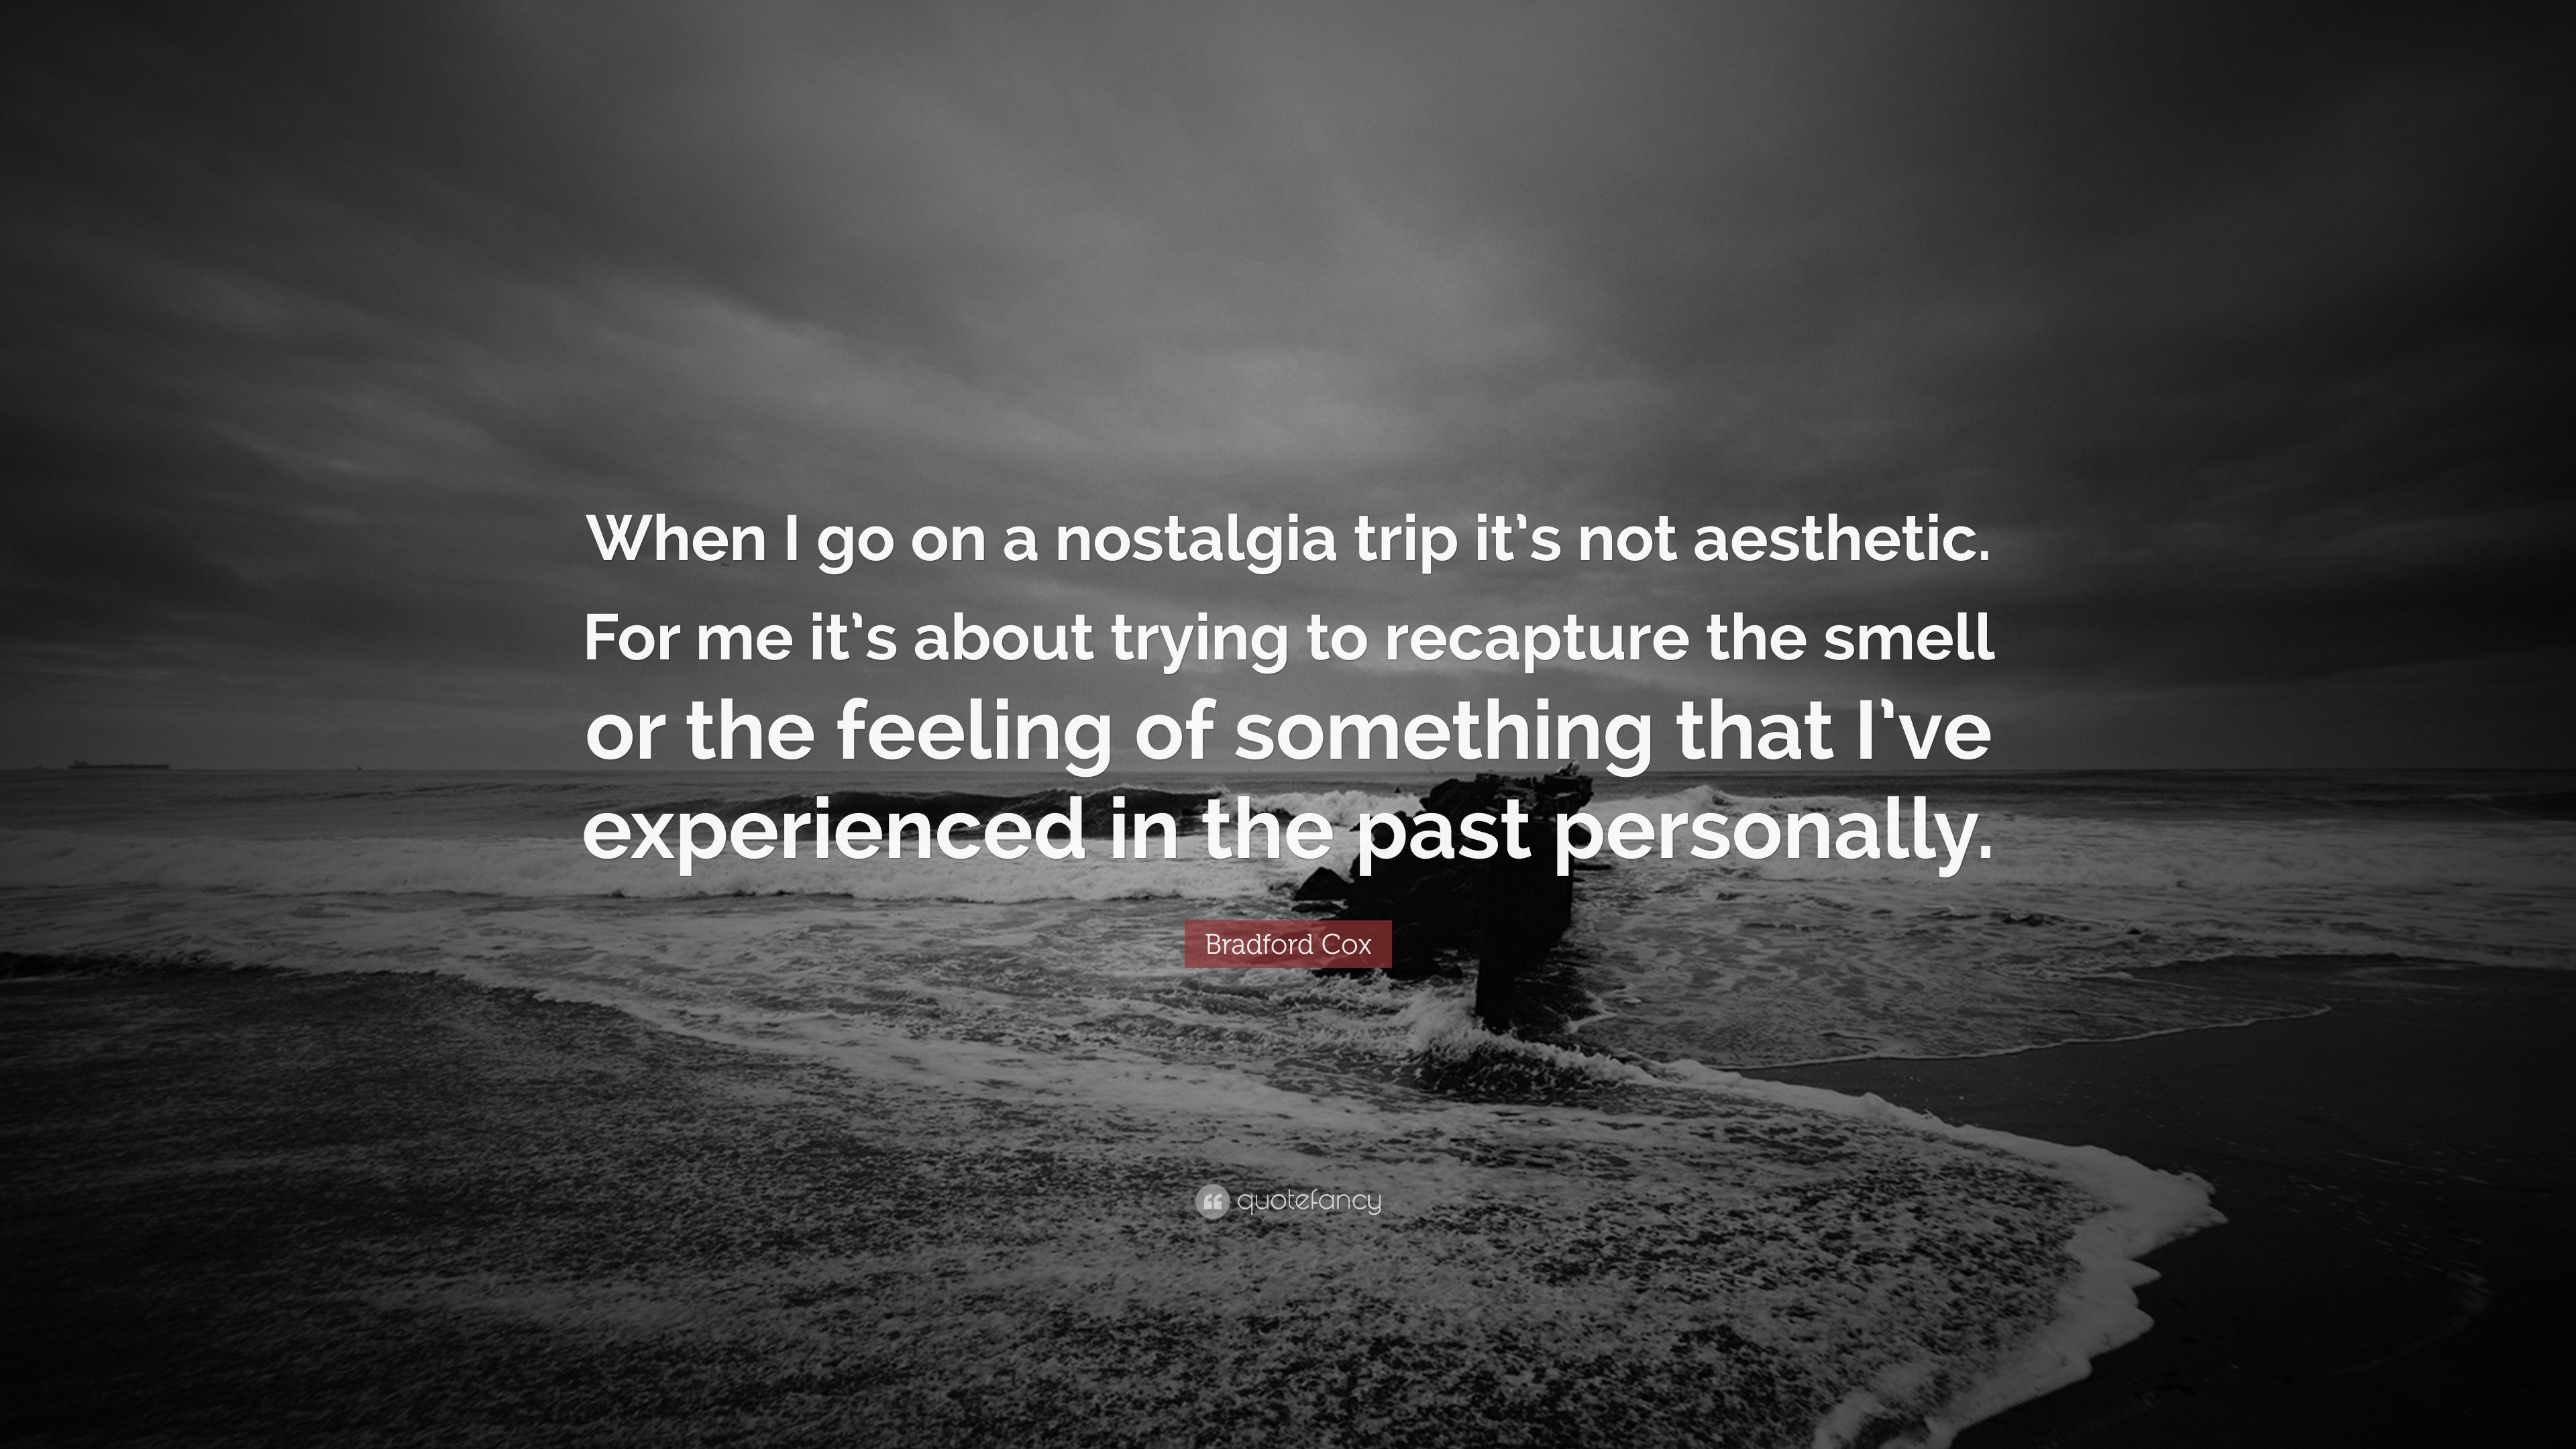 Bradford Cox Quote: “When I go on a nostalgia trip it's not